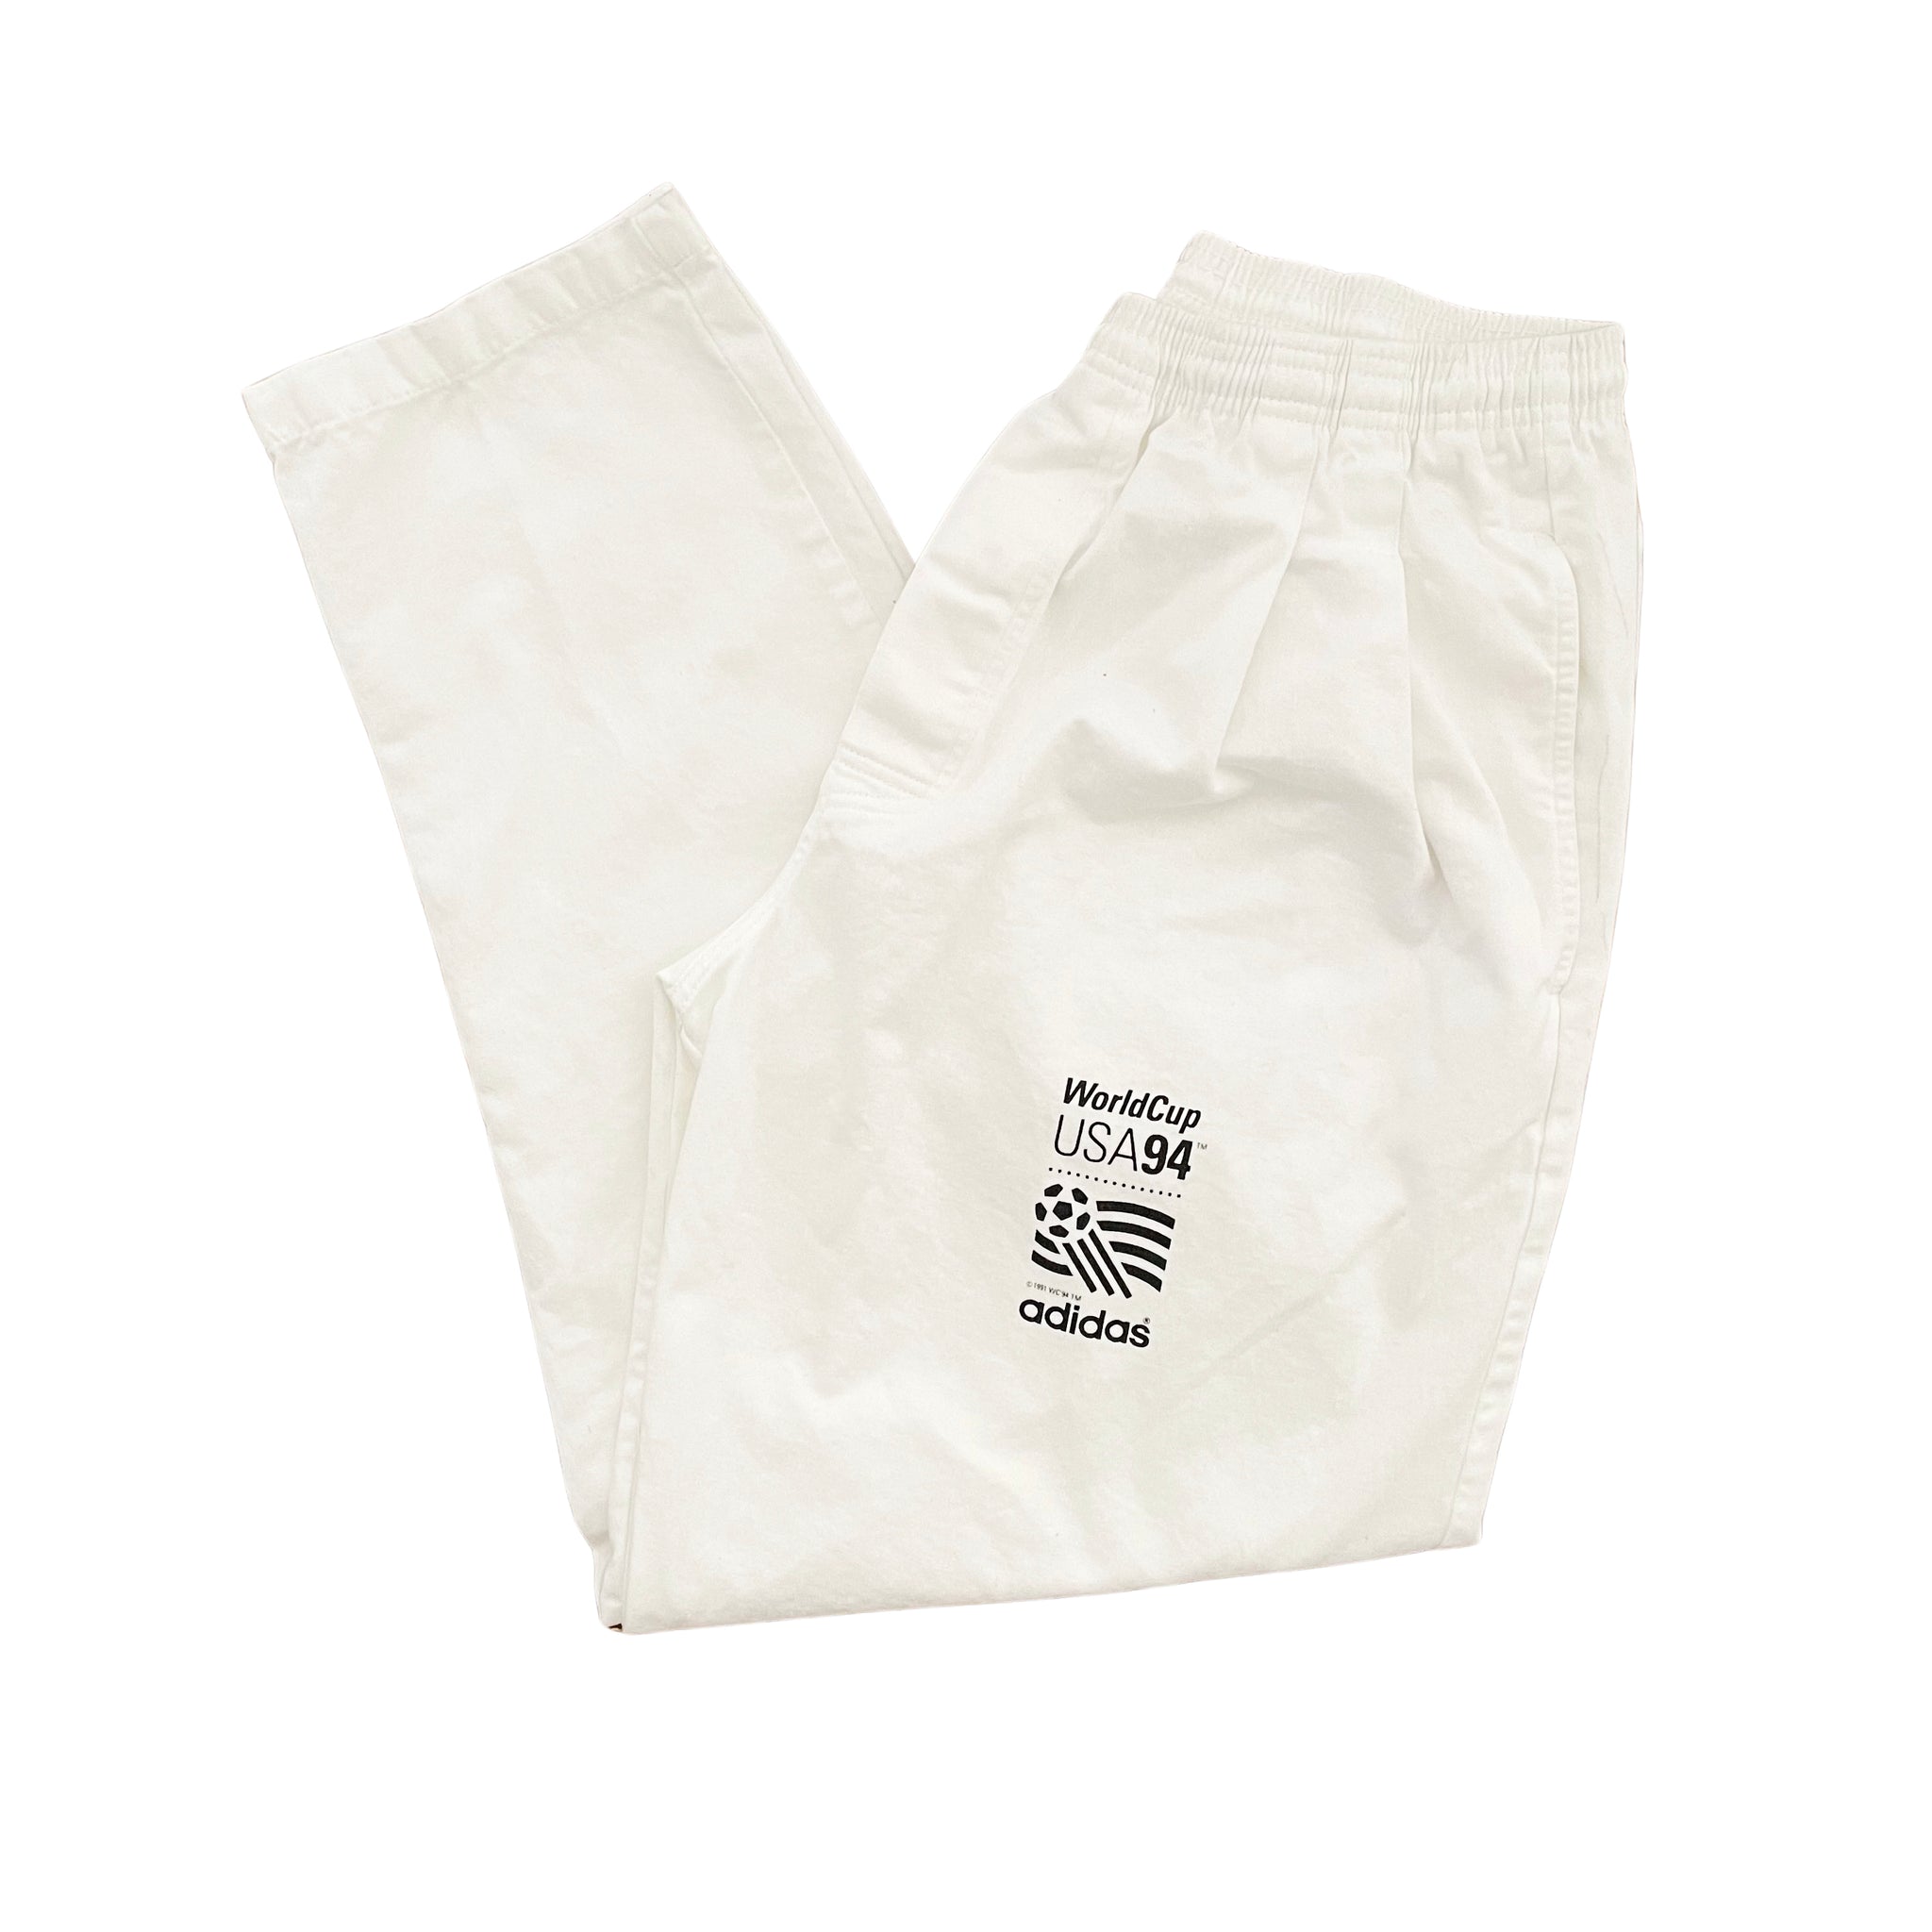 Adidas 1994 World Cup Cotton Pants - L